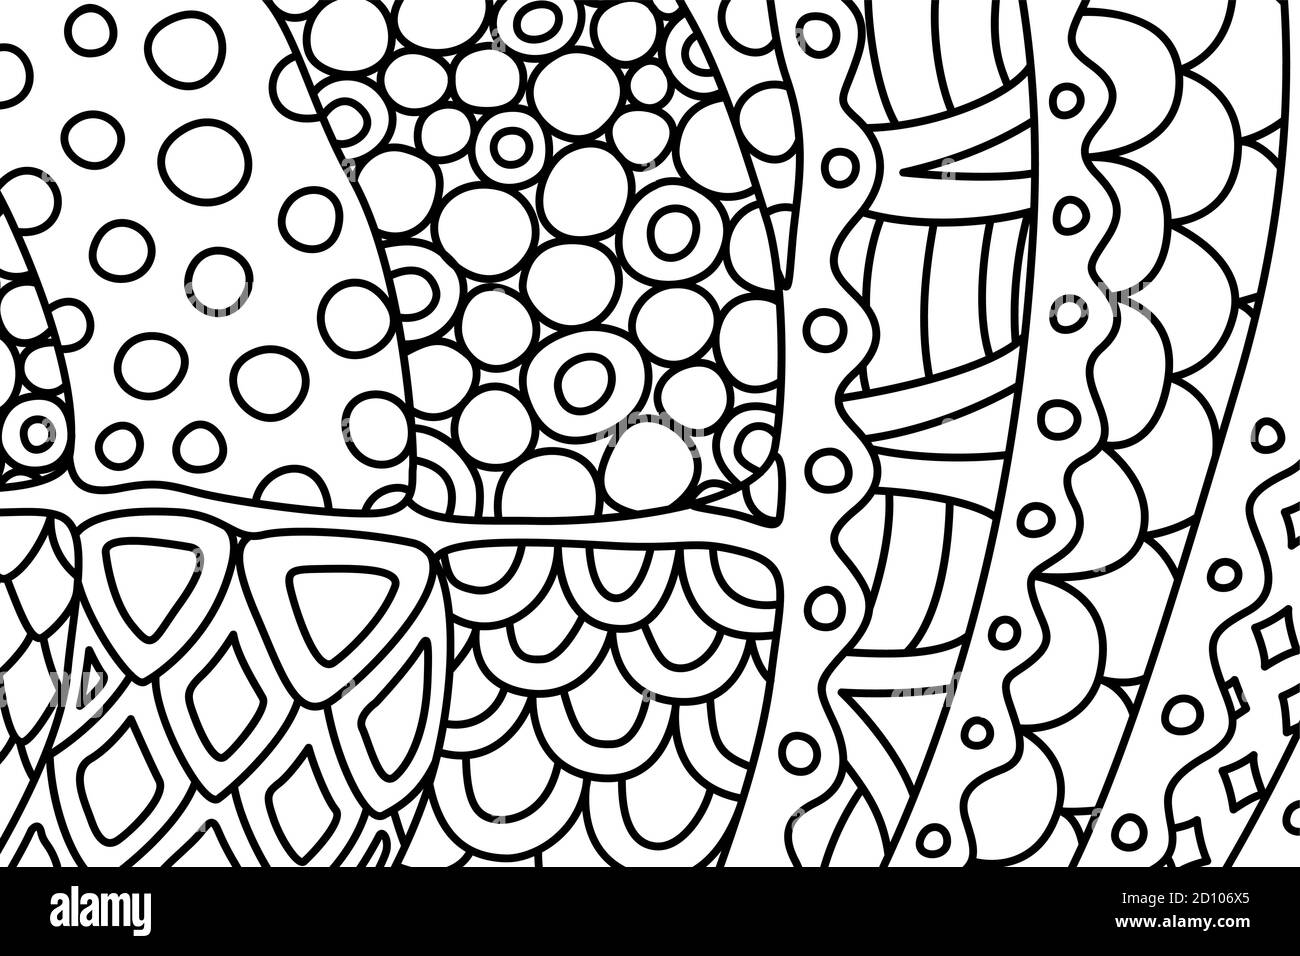 Horisontal Malbuch Seite mit schönen abstrakten linearen Muster Stock Vektor